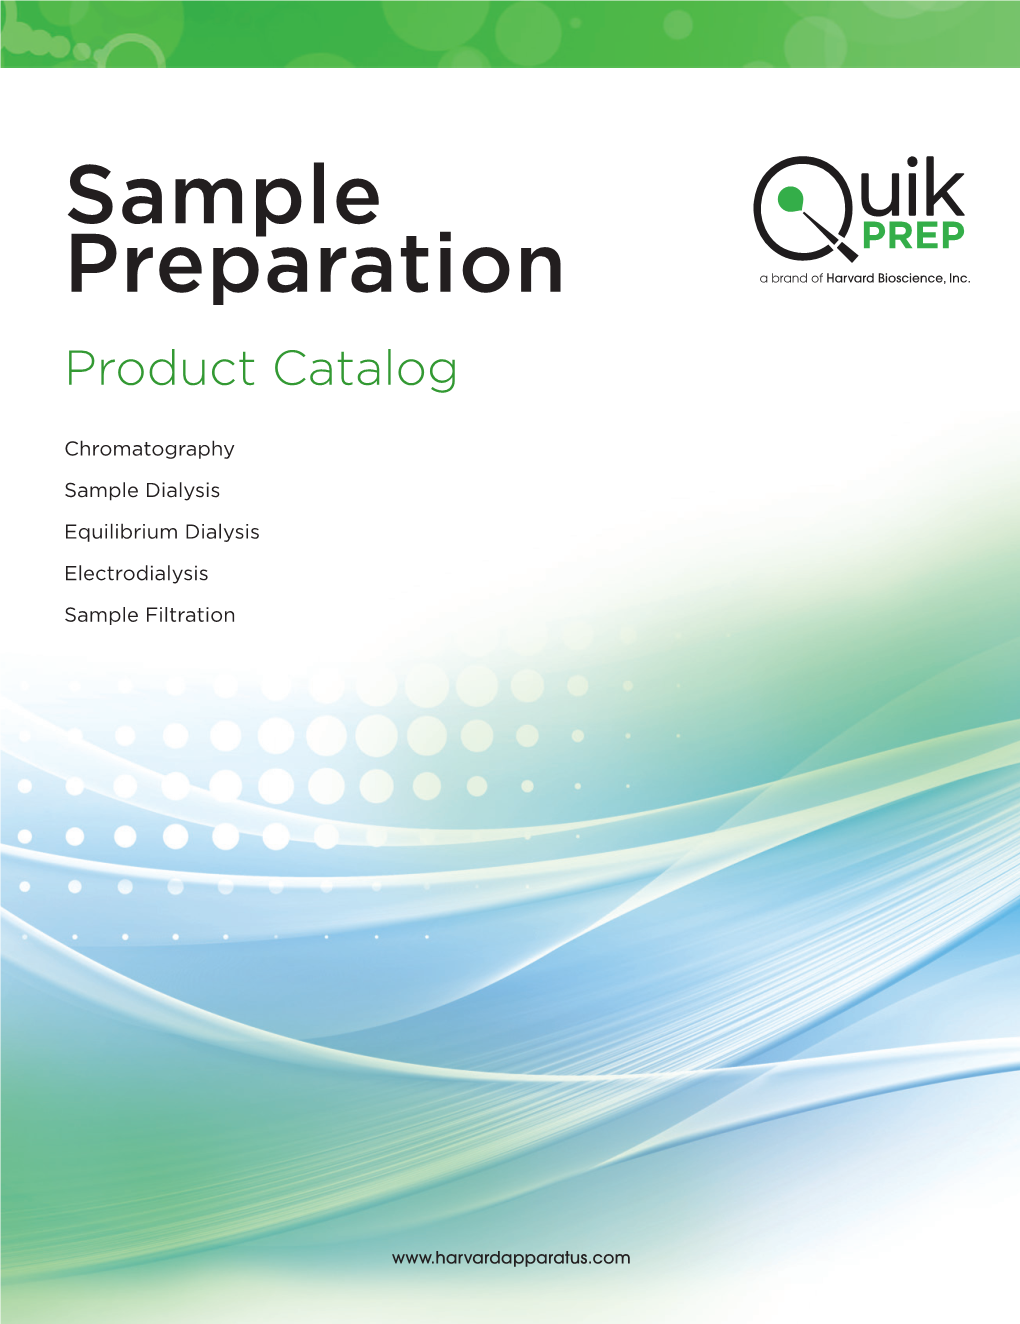 Sample Preparation Product Catalog